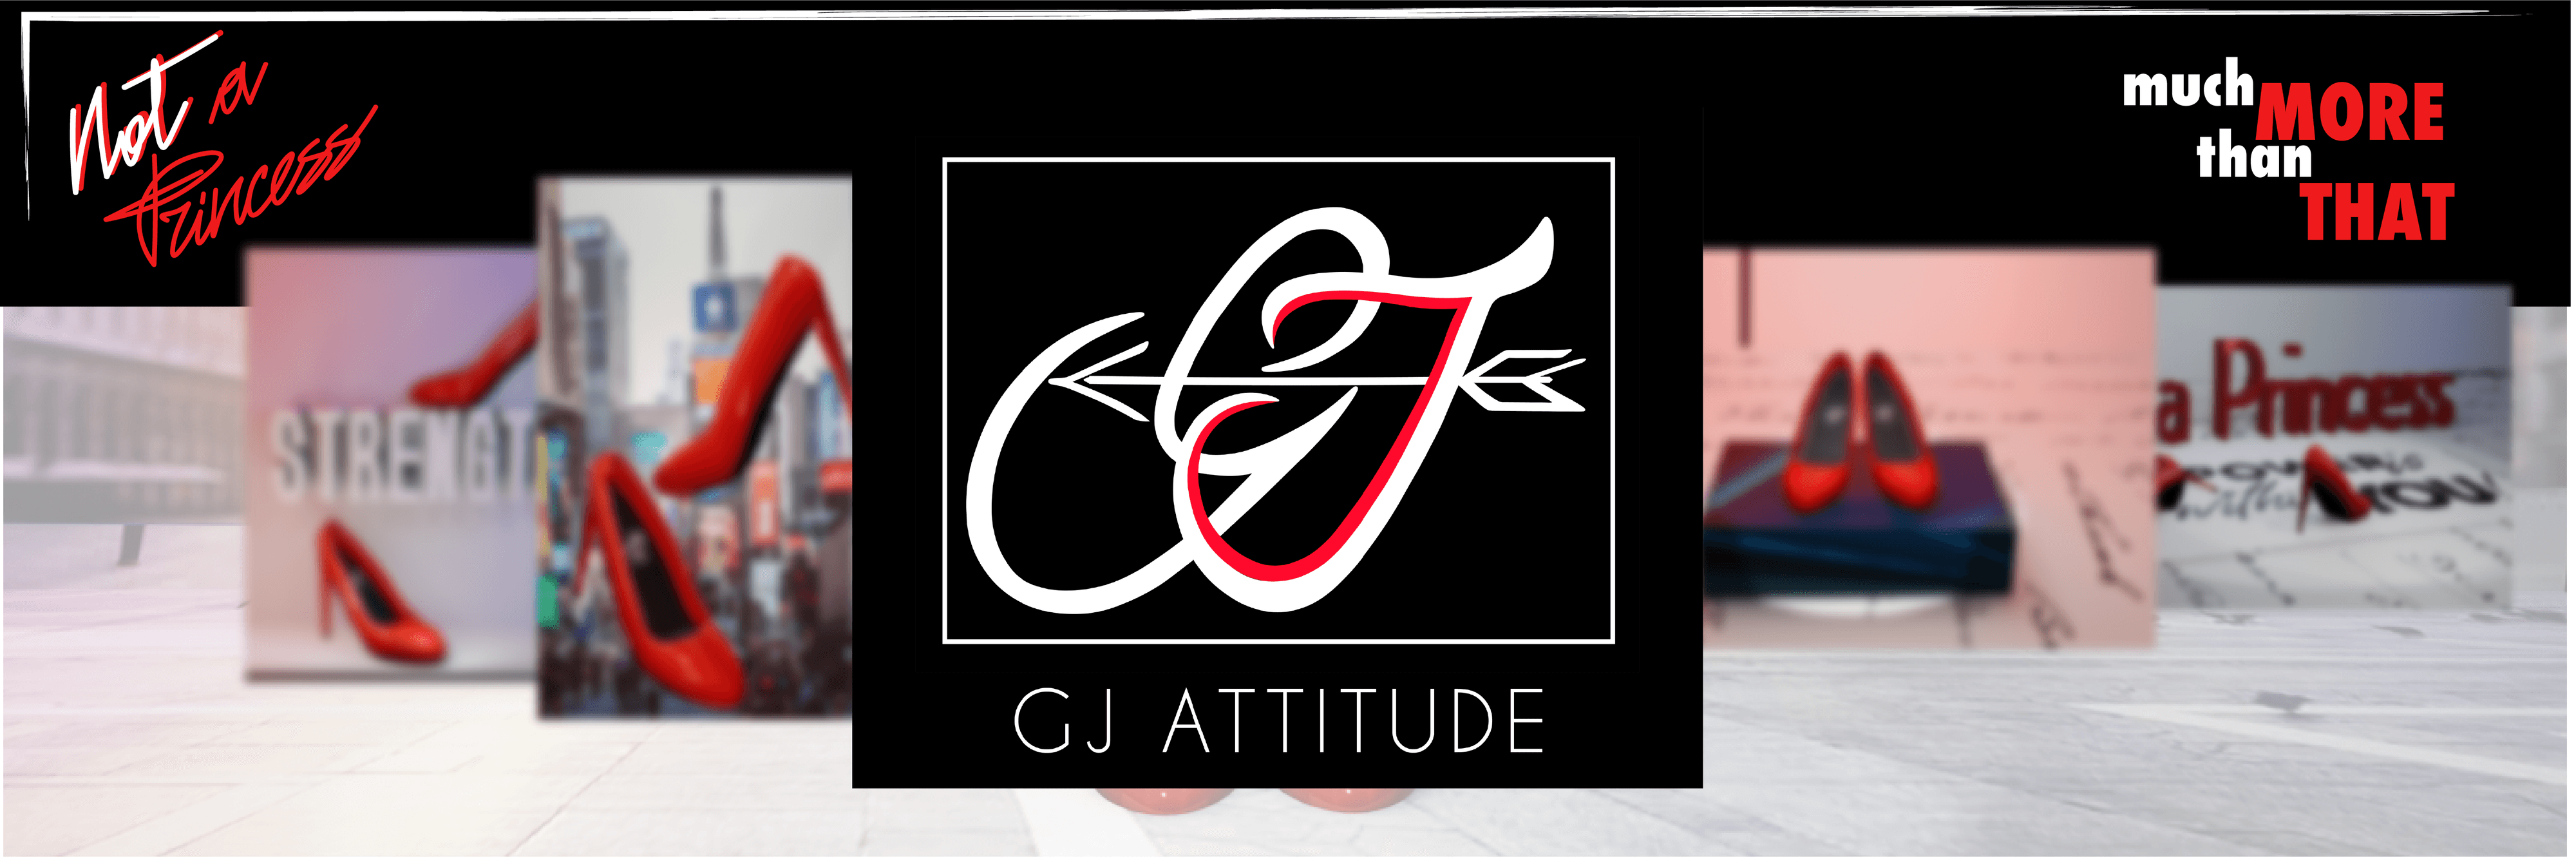 Gj_Attitude banner